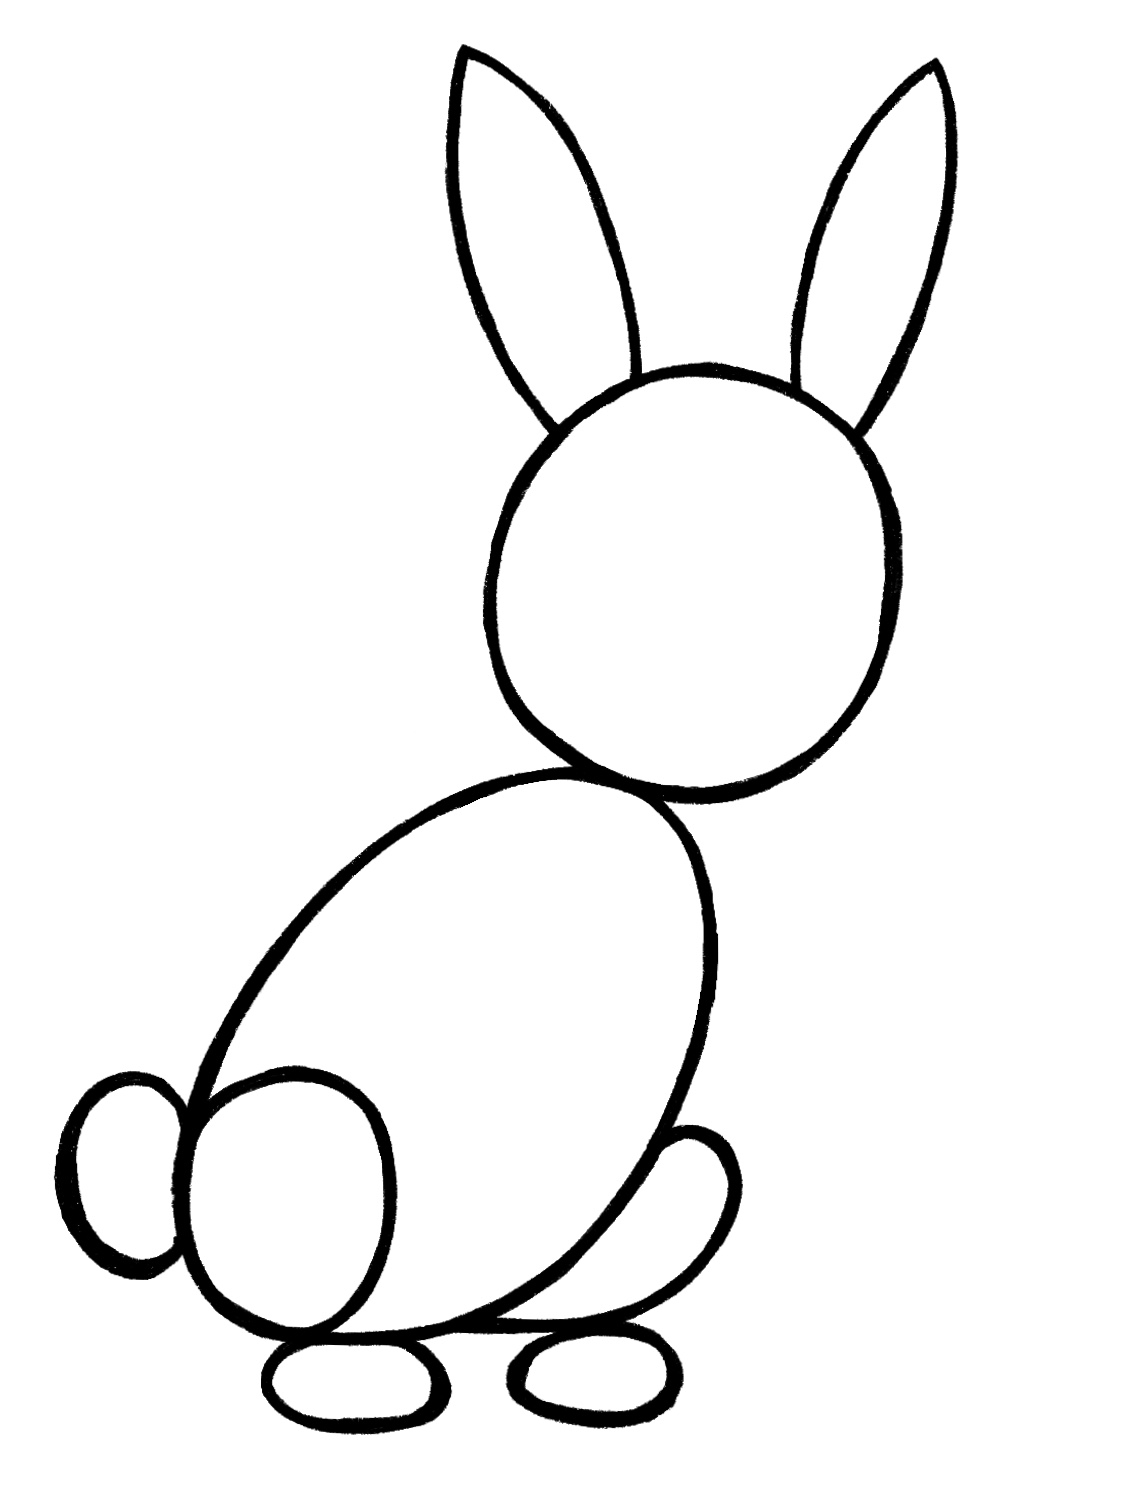 How to Draw a Bunny | Nil Tech - shop.nil-tech